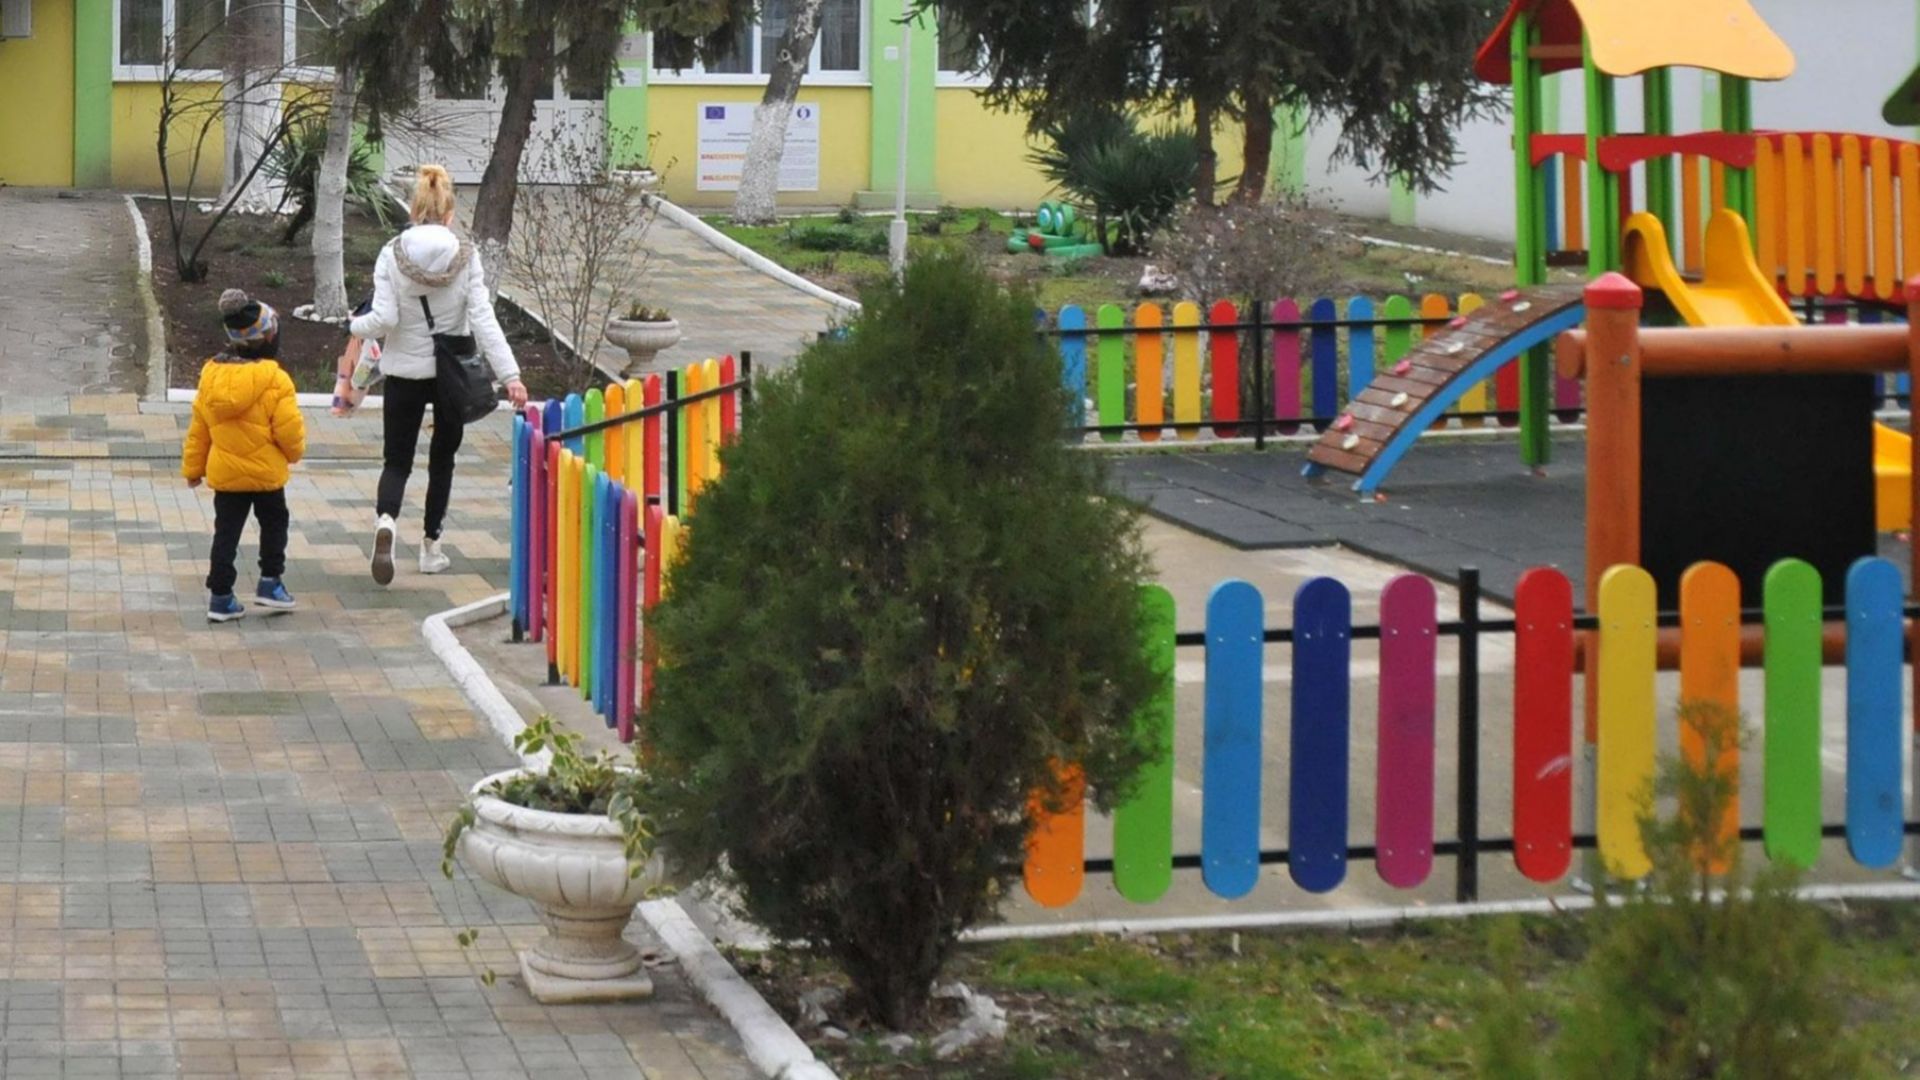 Нови правила за прием в детските градини в София